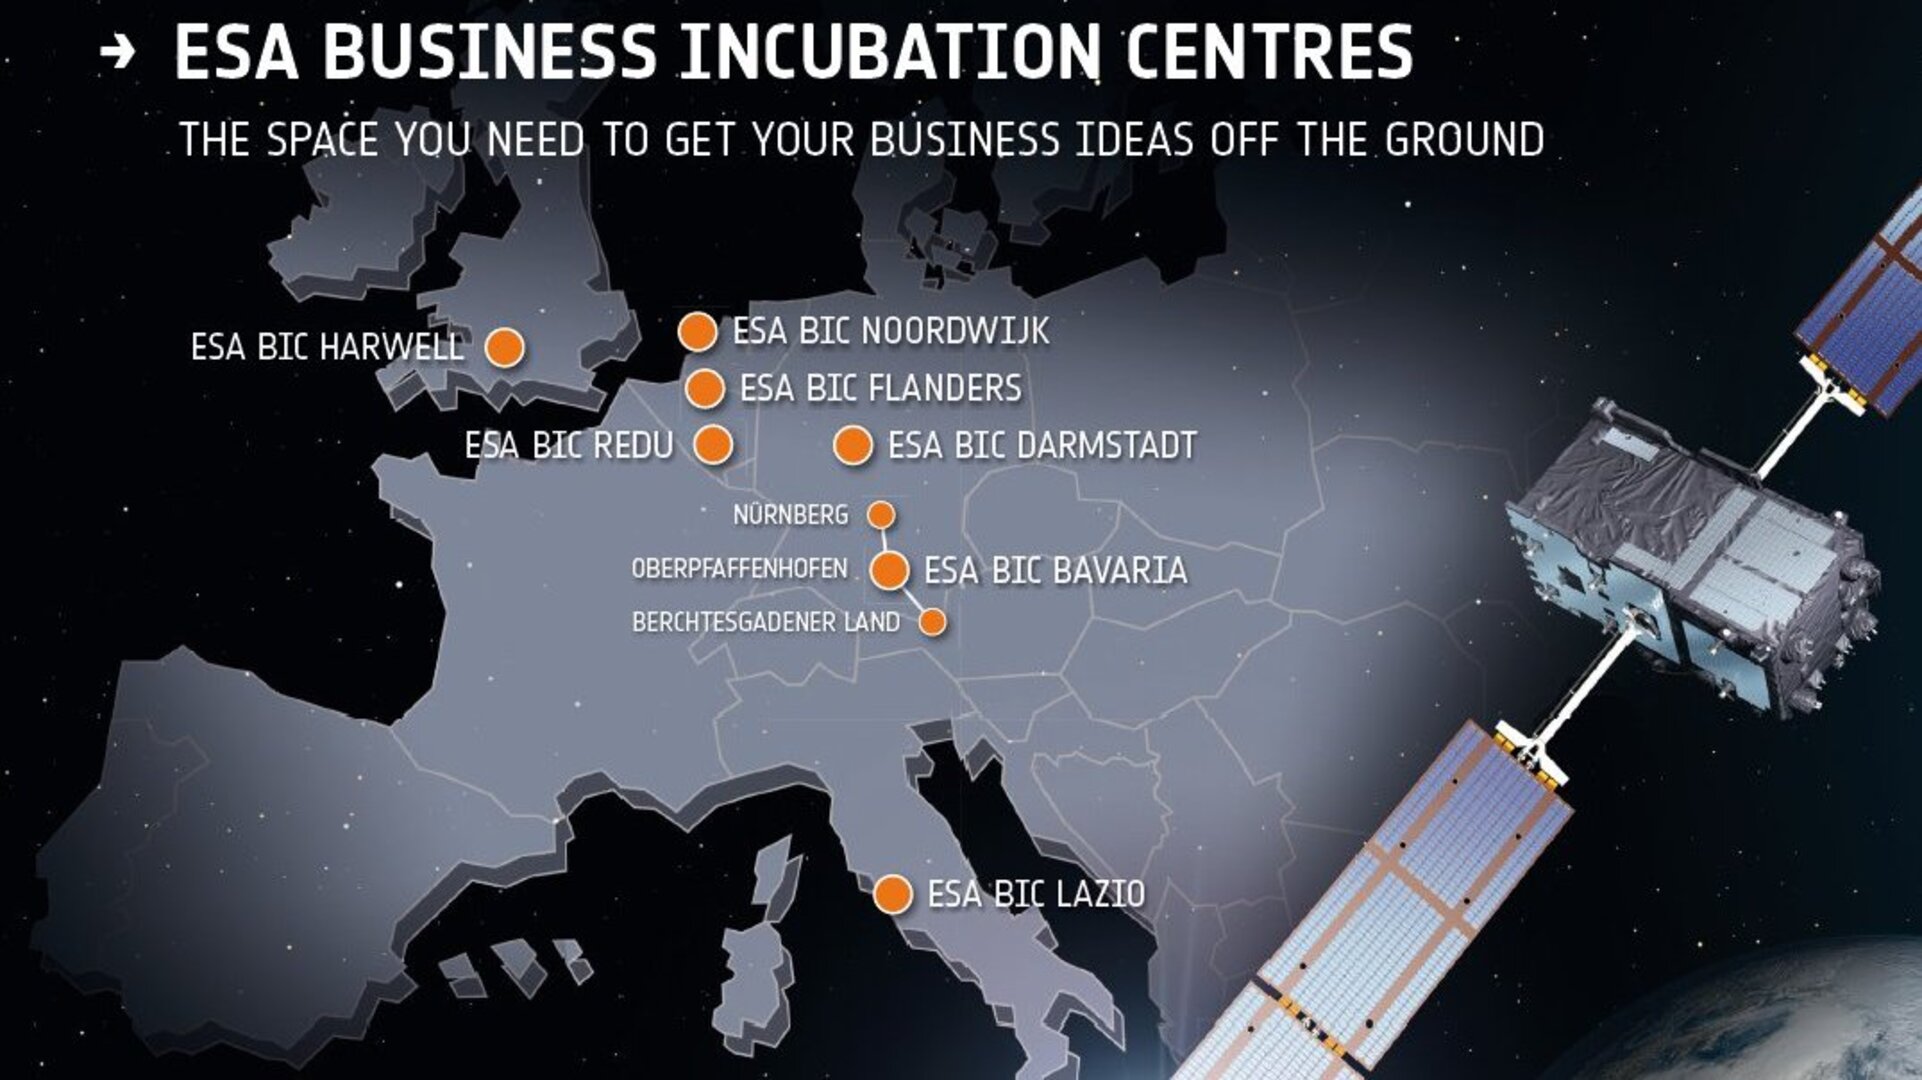 ESA Business Incubation Centres